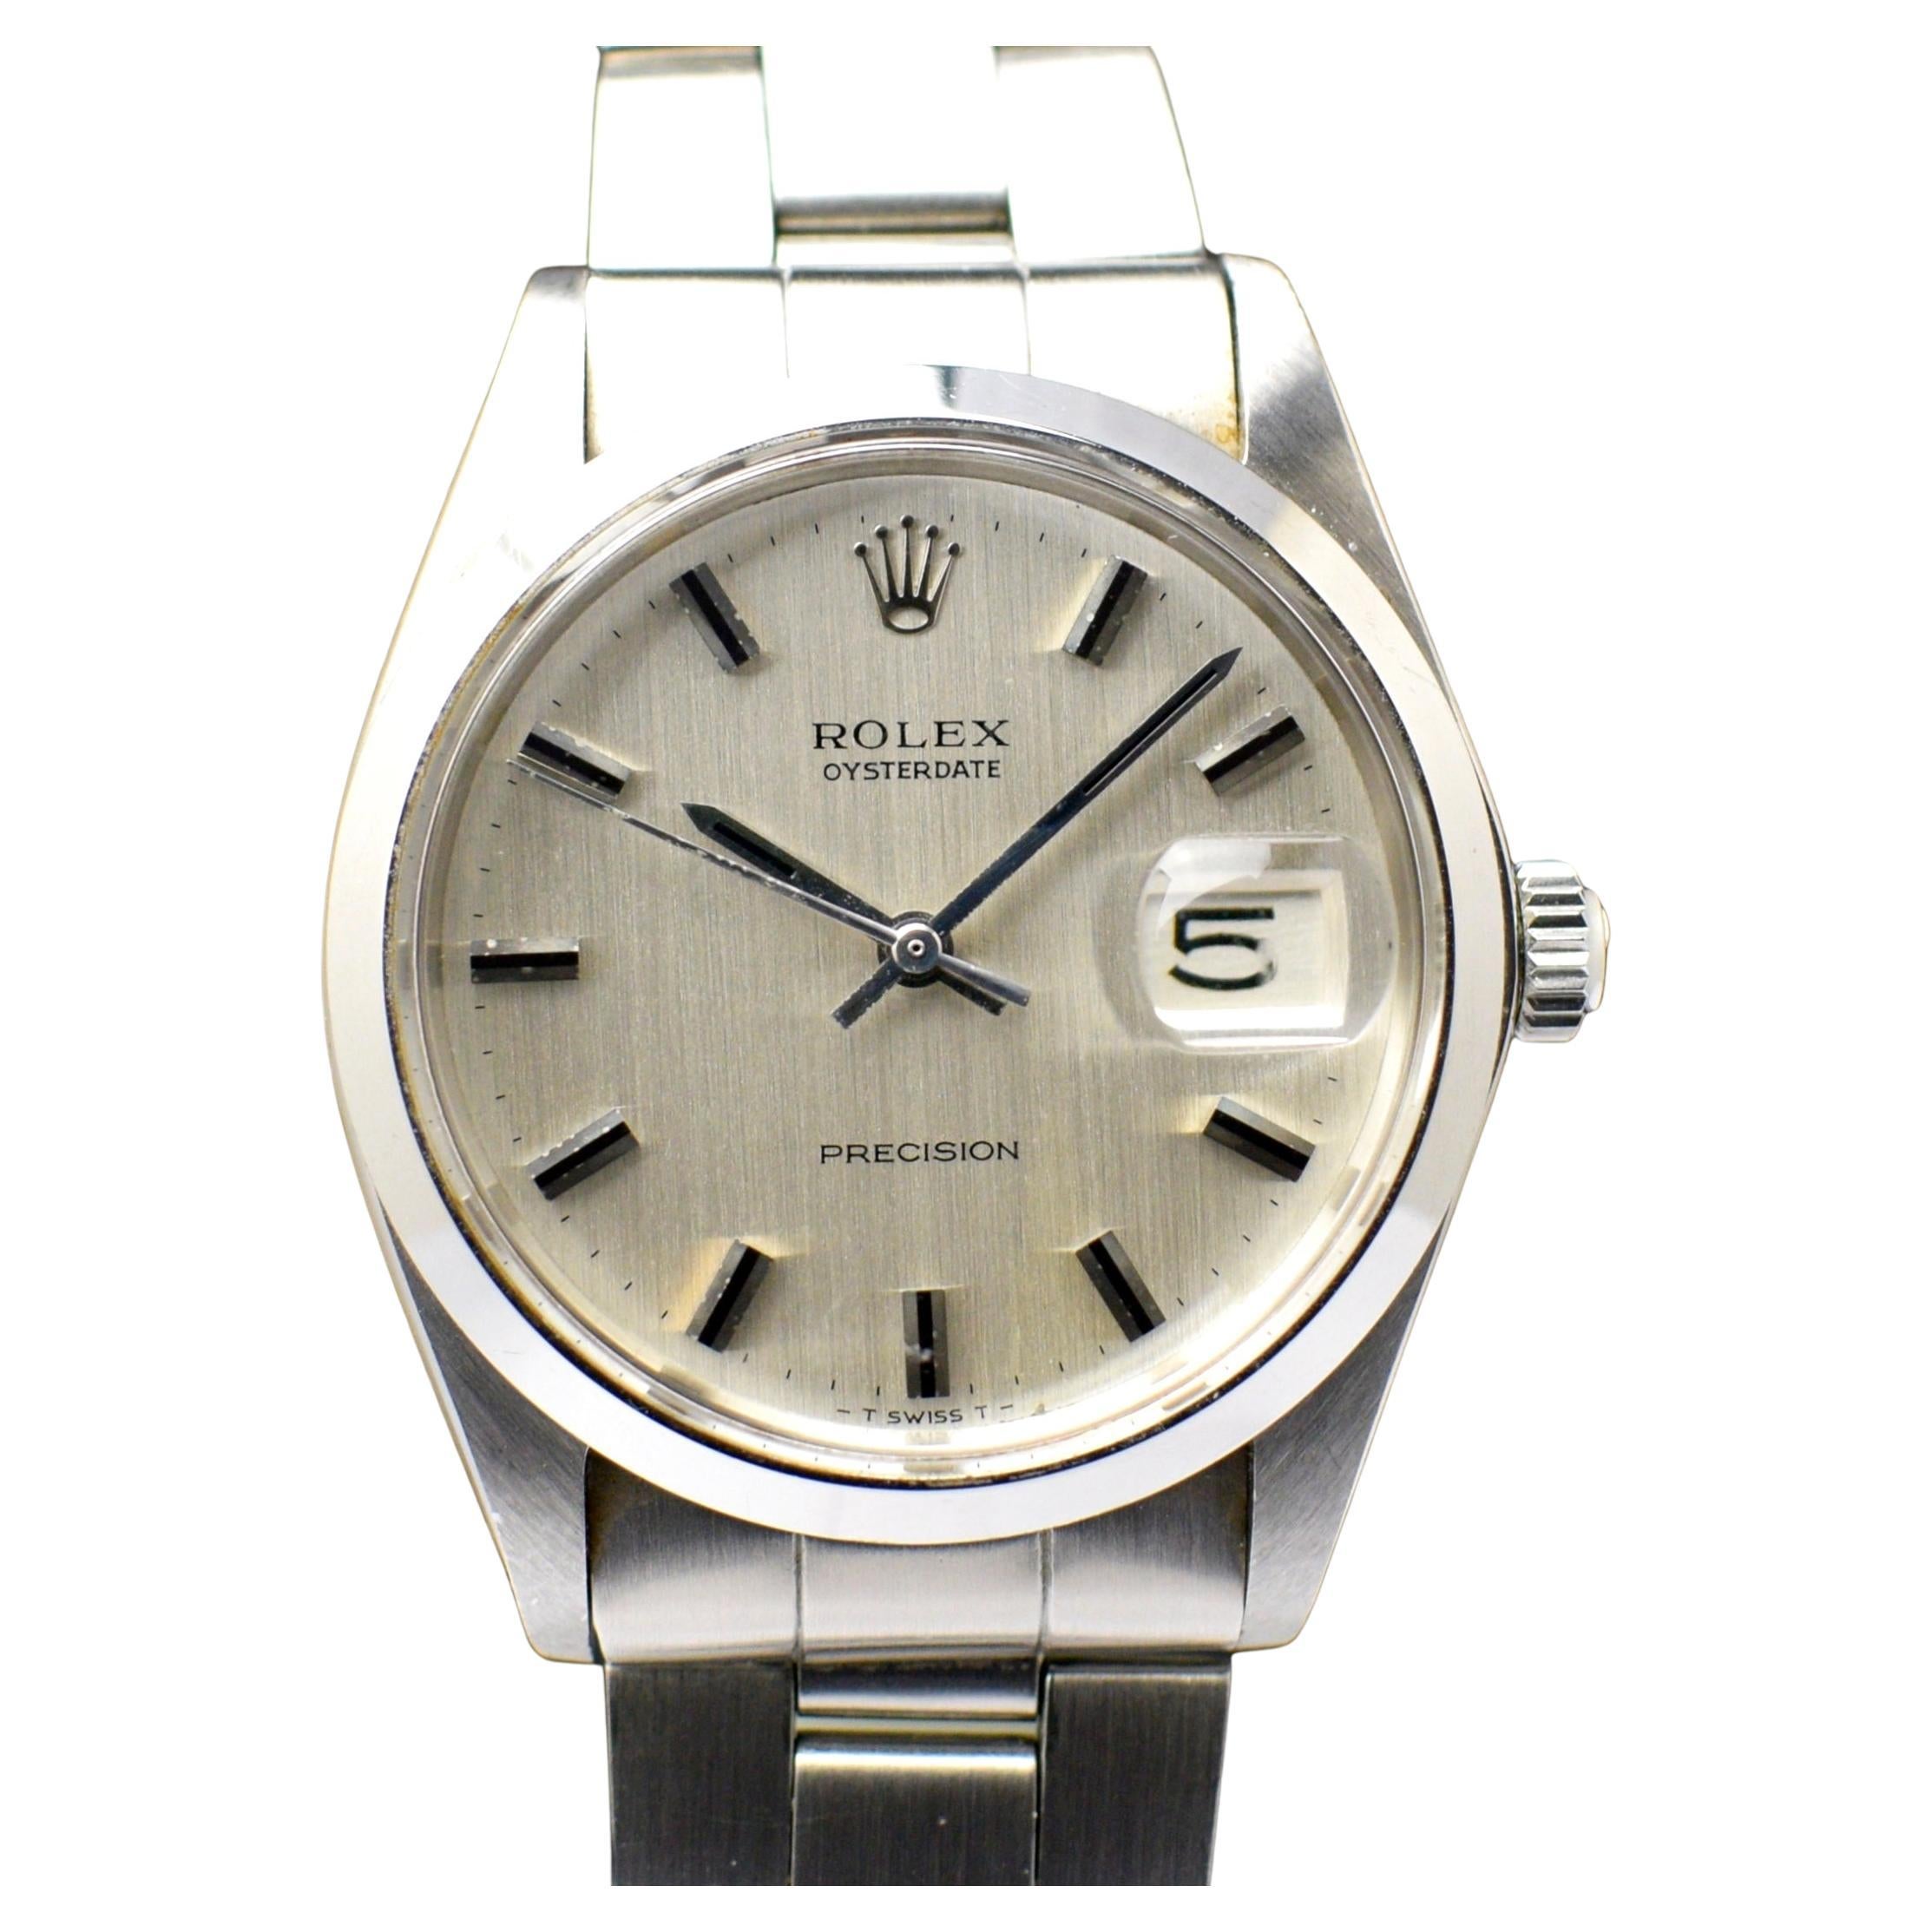 Rolex Oysterdate Precision Silver Dial Manual Wind 6694 Steel Watch, 1971